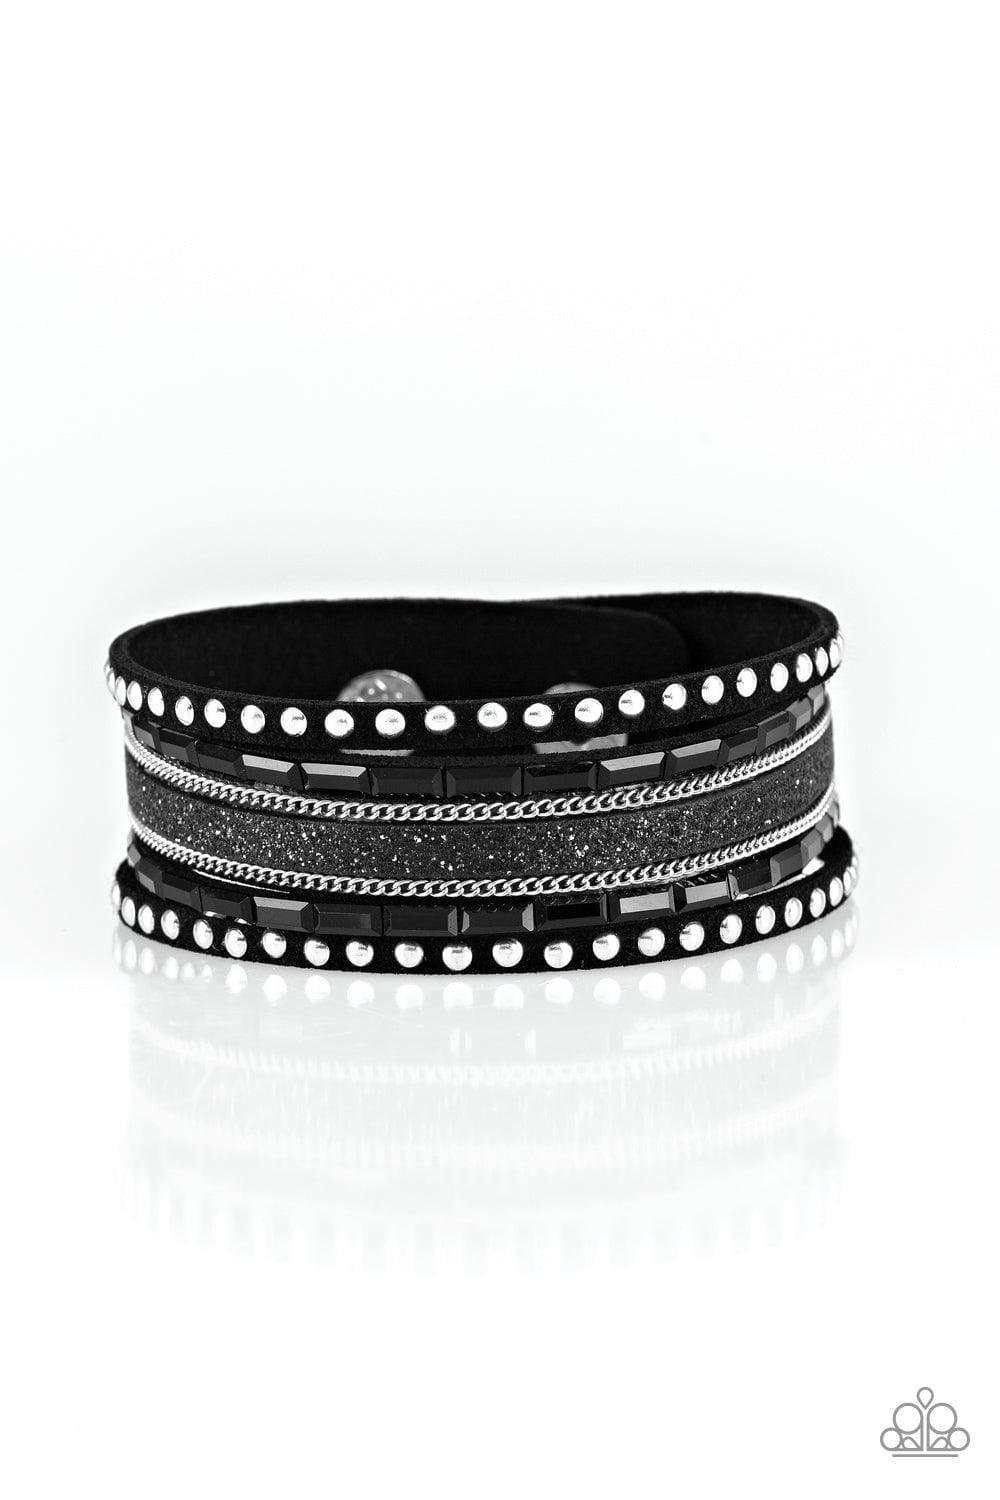 Paparazzi Accessories - Seize The Sass - Black Snap Bracelet - Bling by JessieK